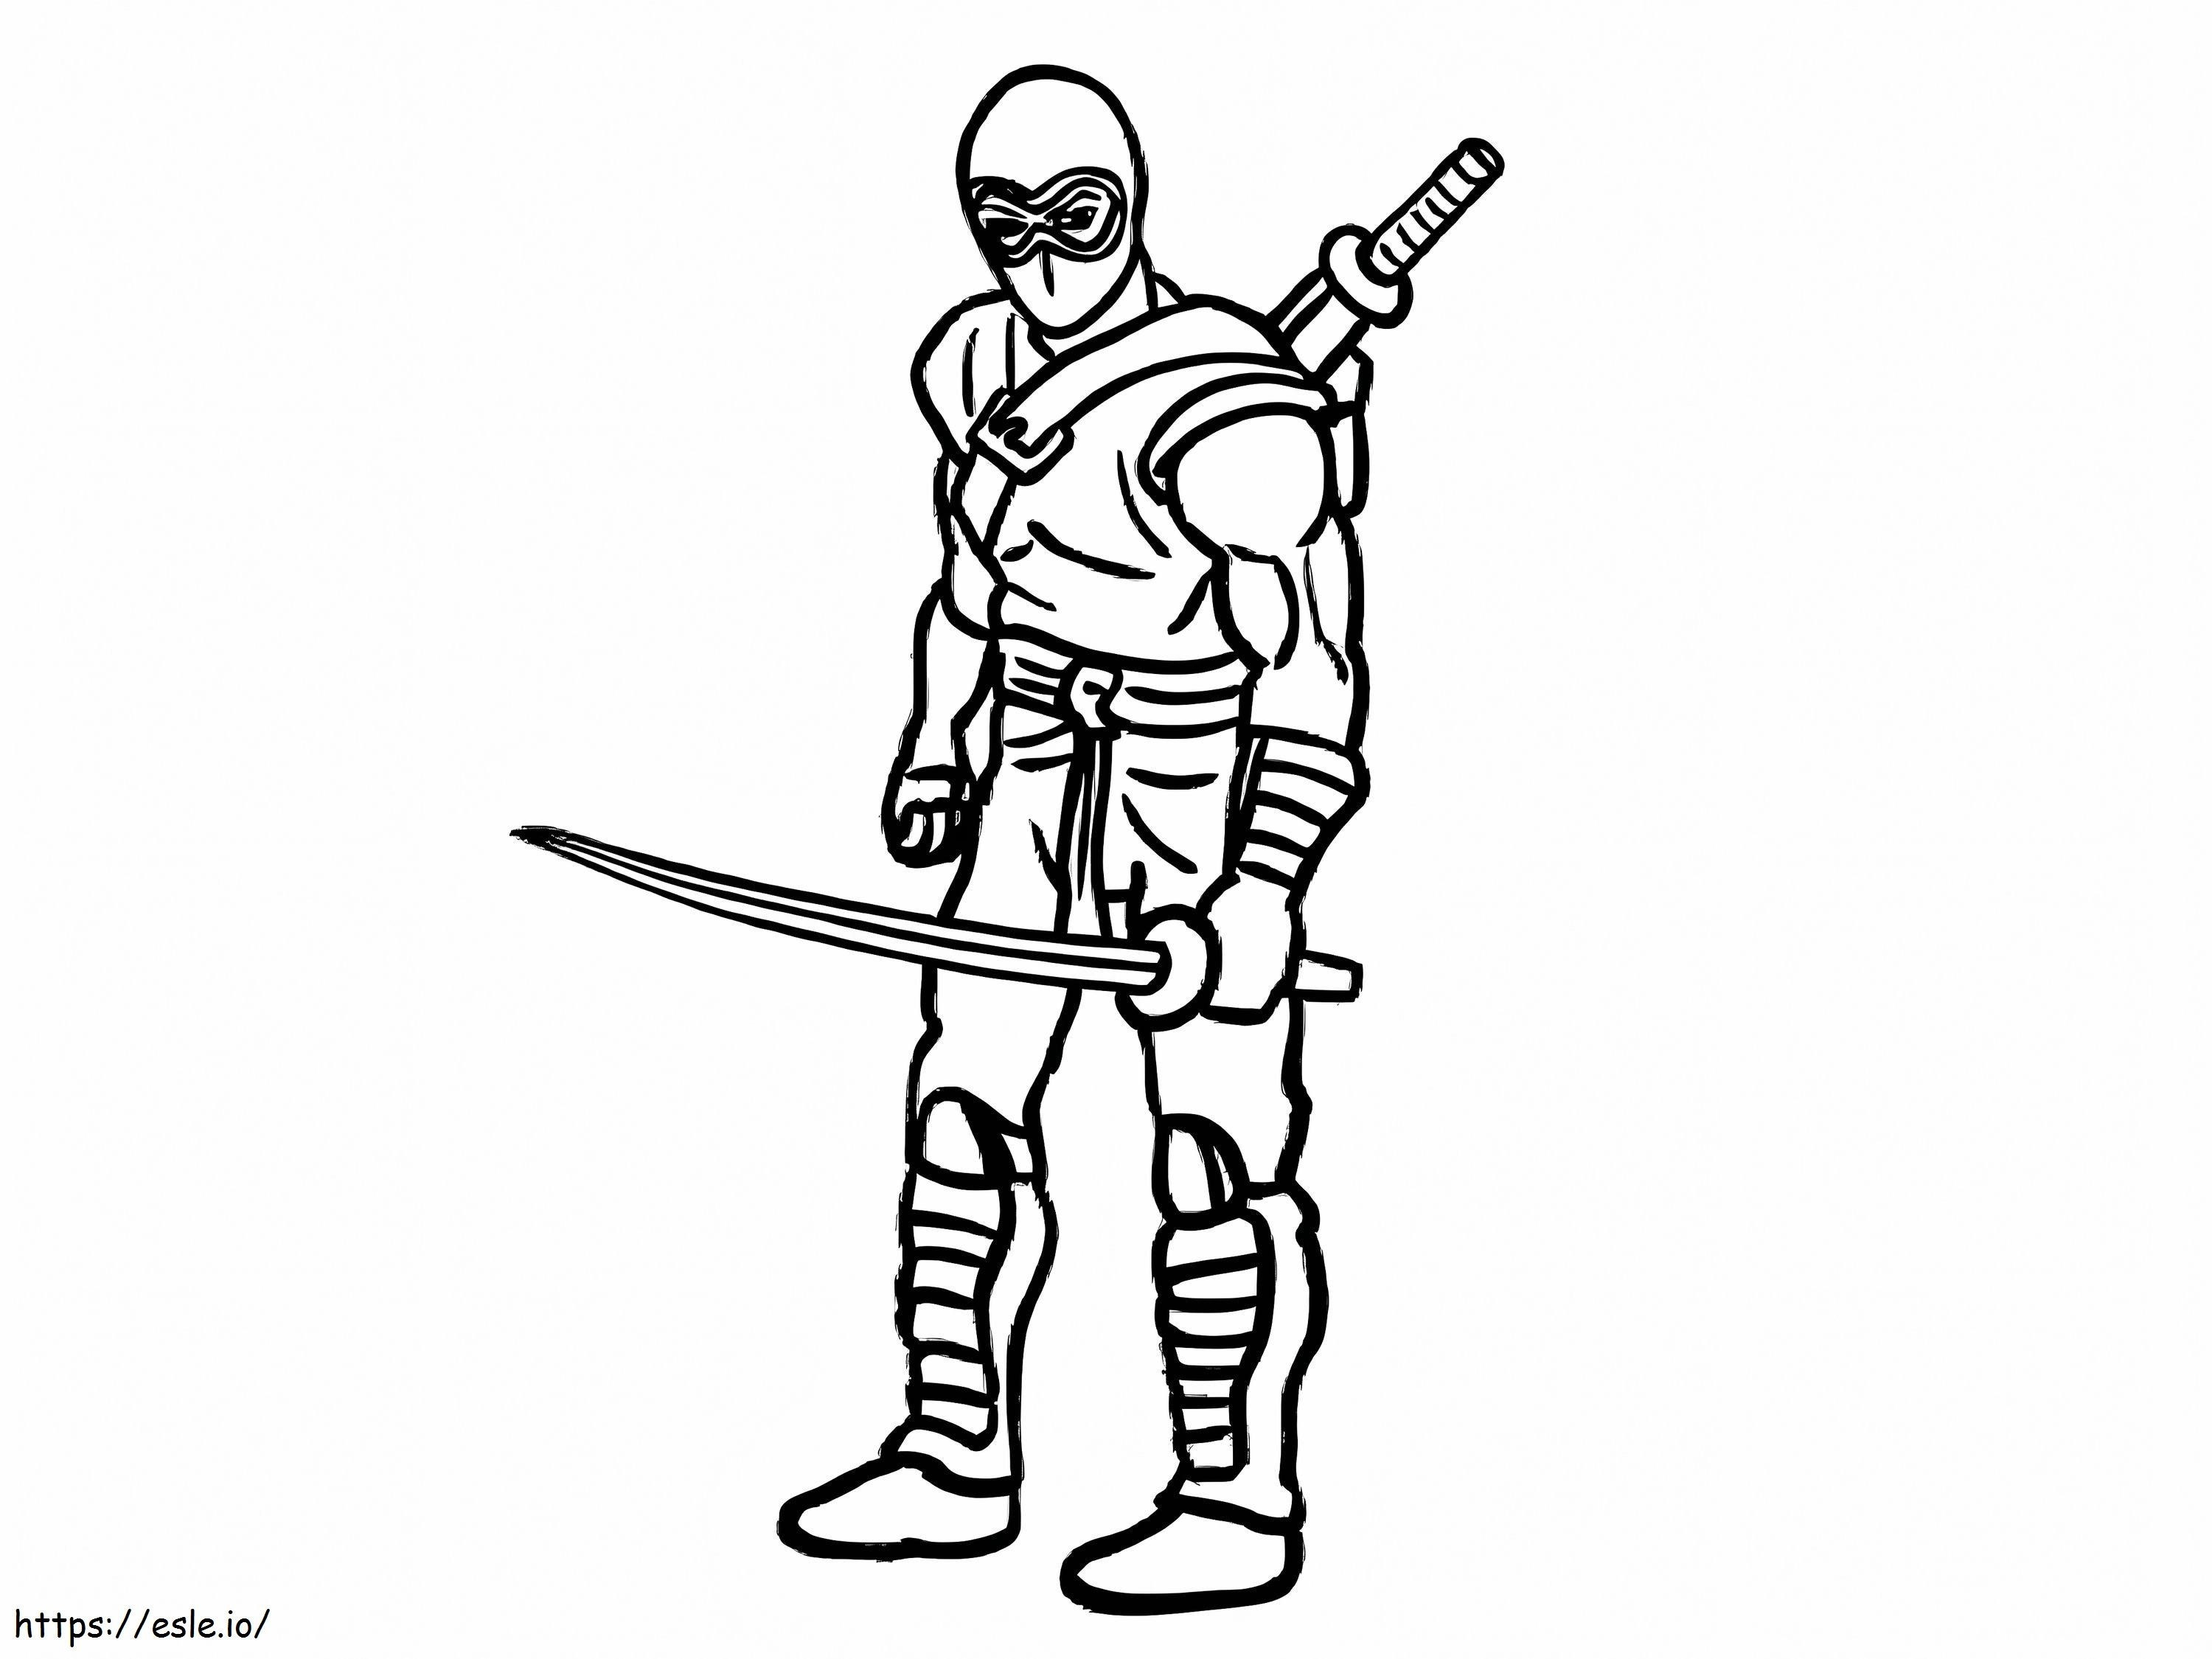 Ninja 2 coloring page